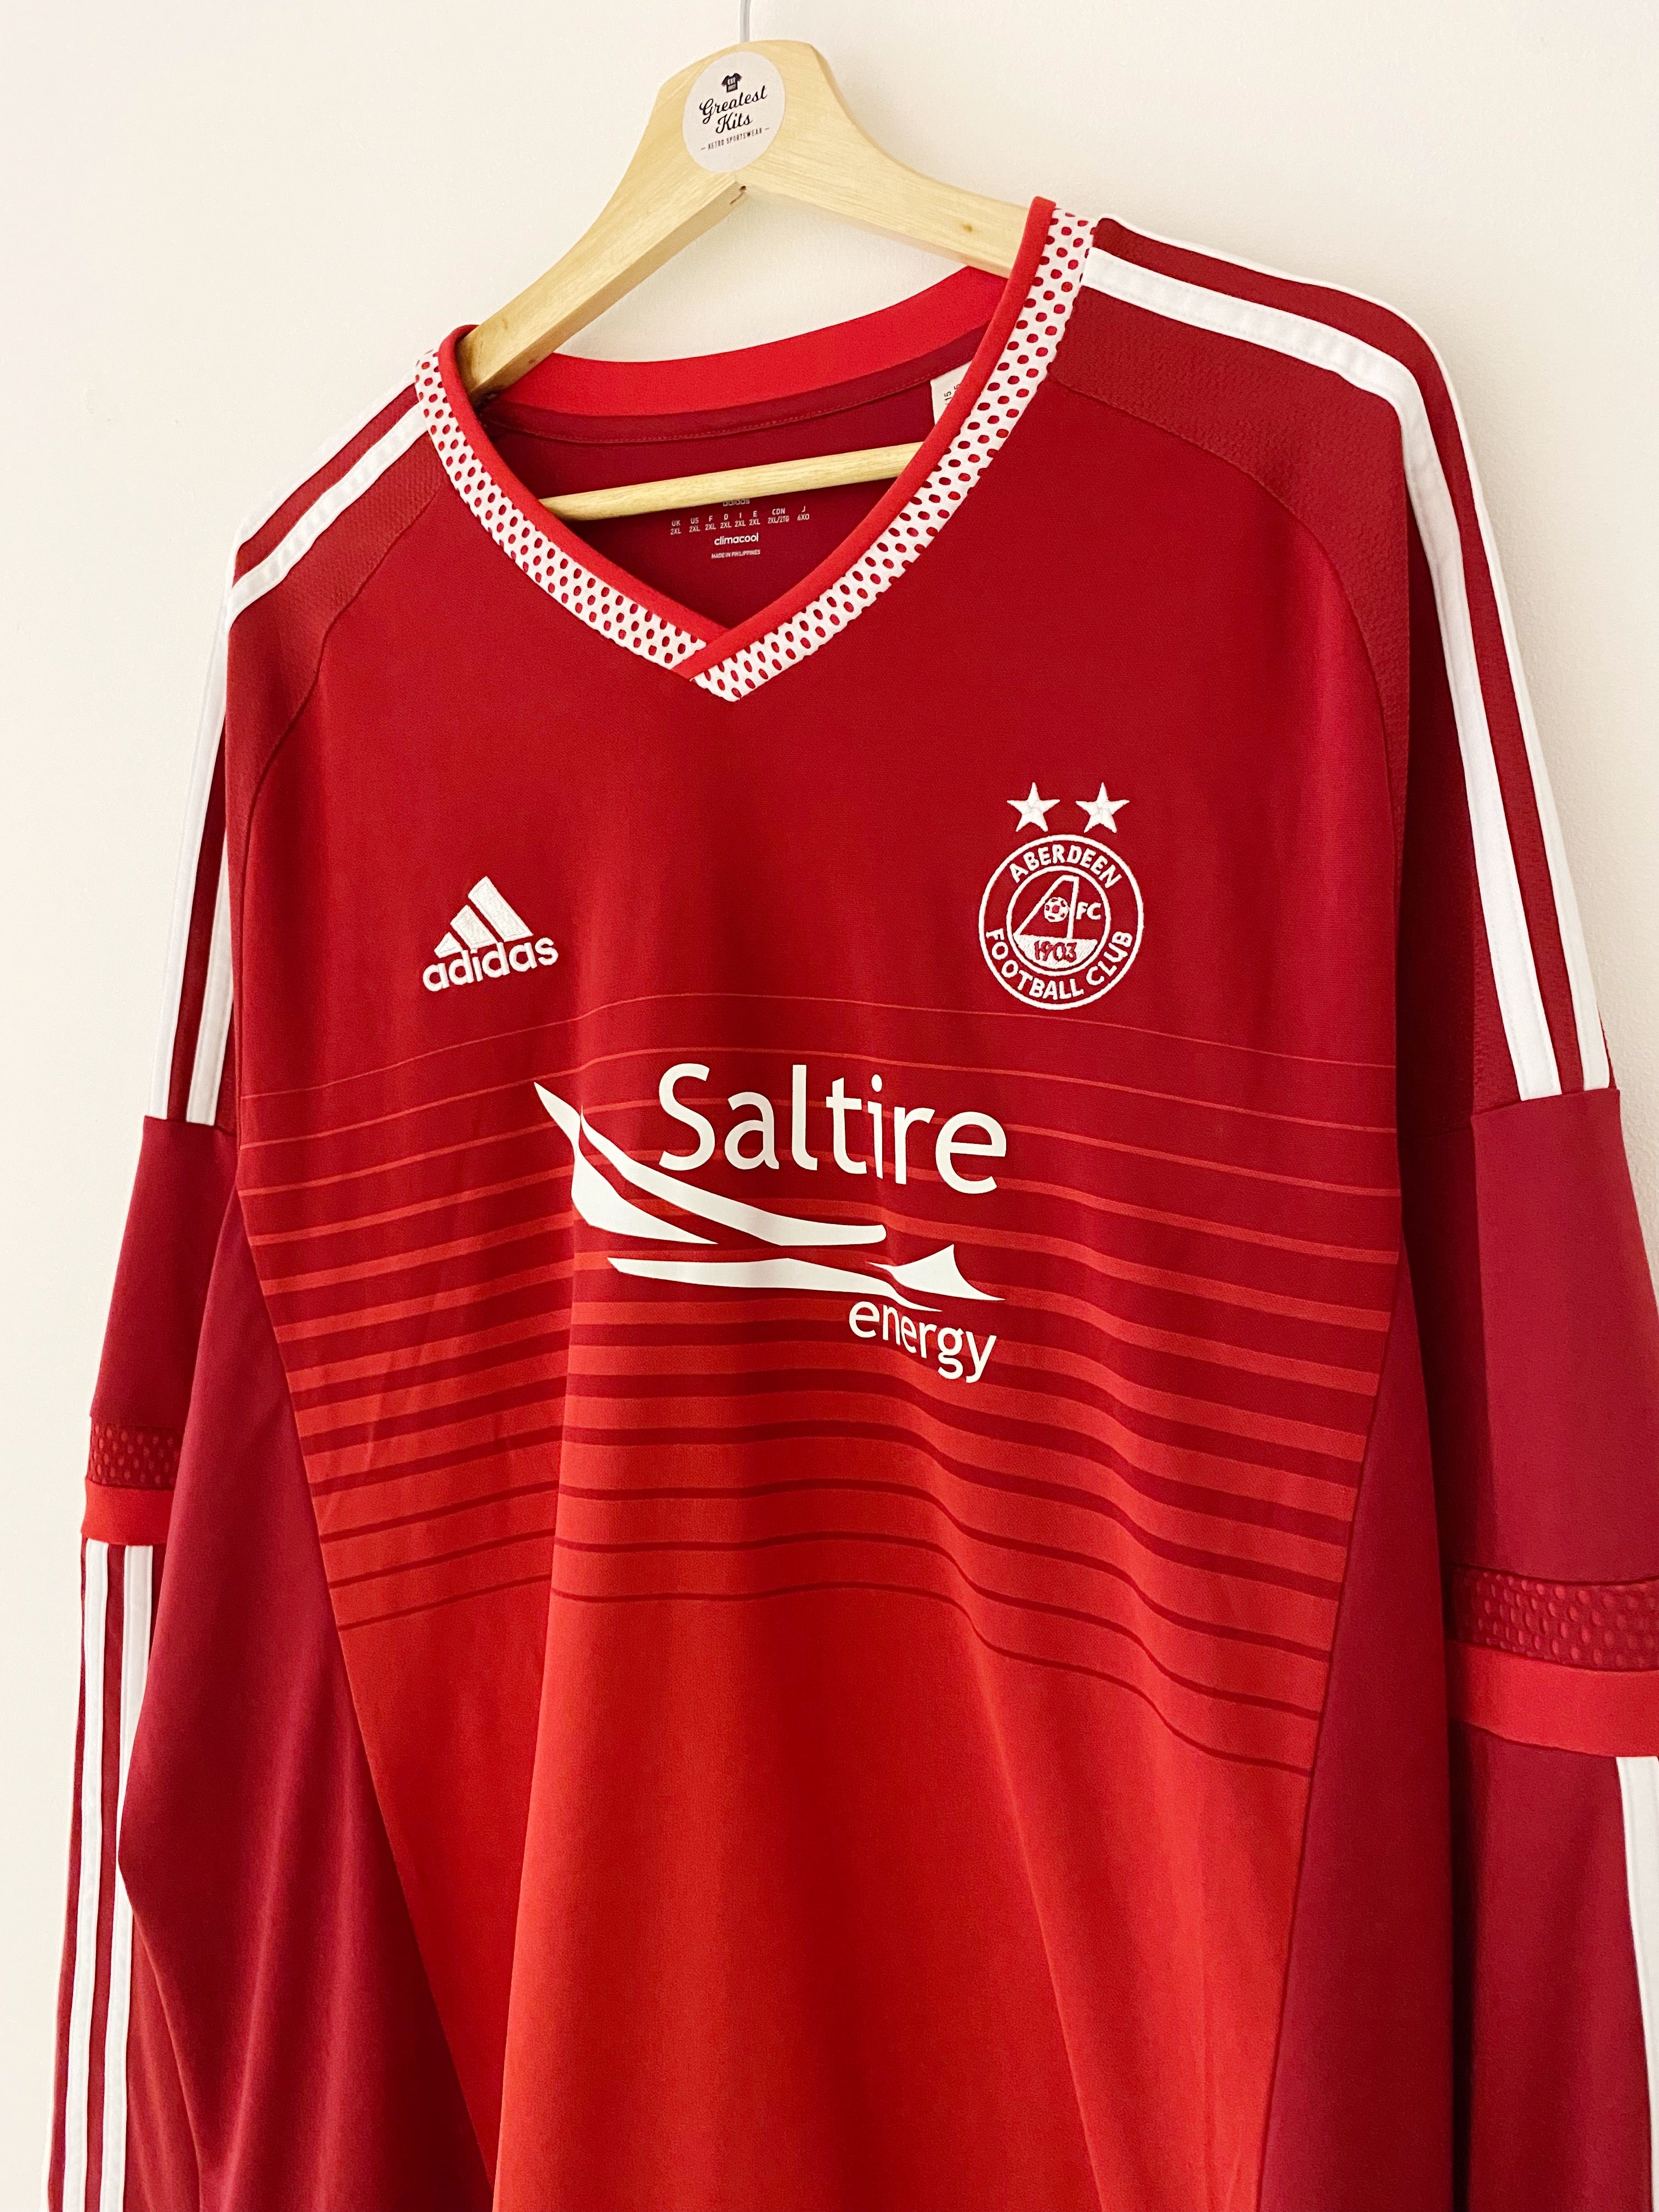 Camiseta de local del Aberdeen 2015/16 L/S (XXL) 9,5/10 